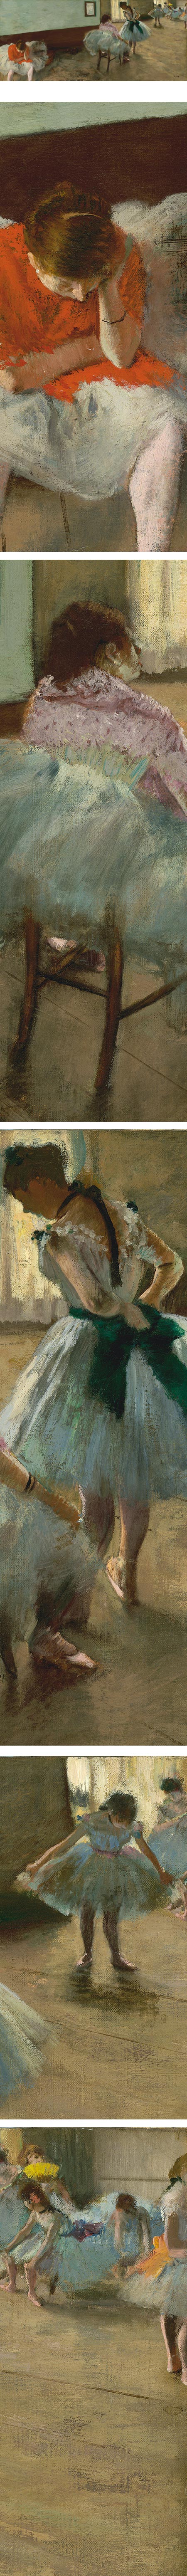 The Dance Lesson, Edgar Degas